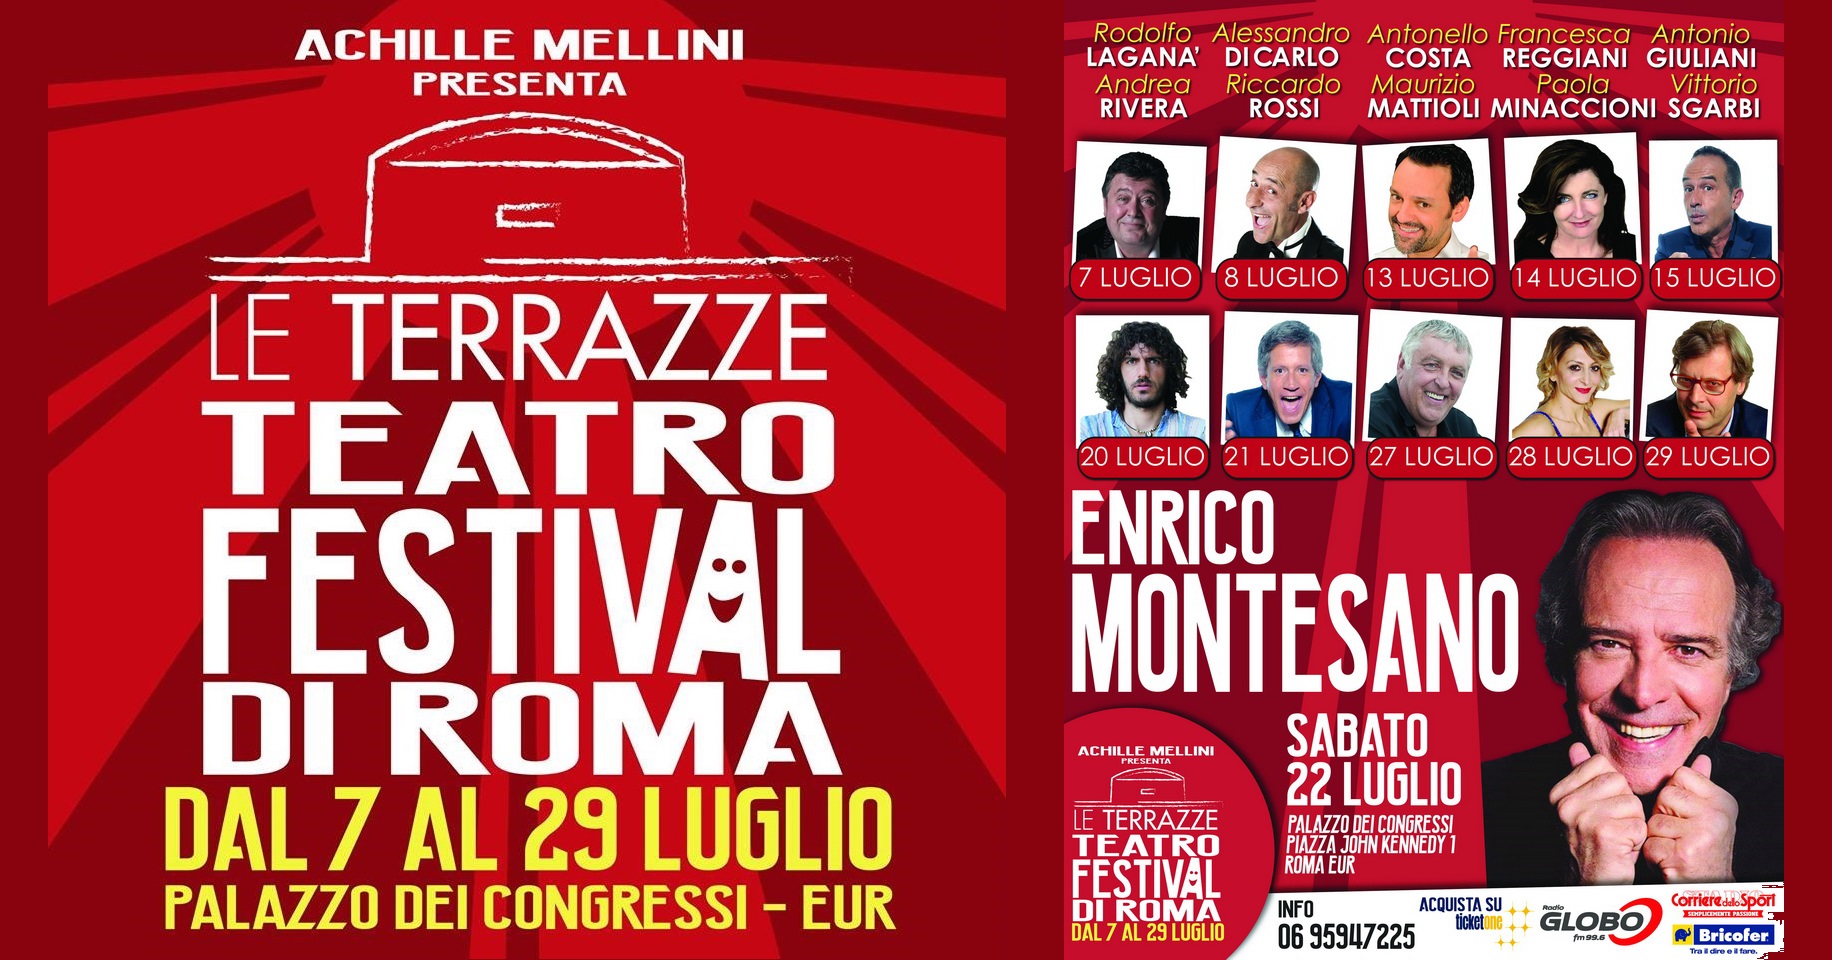 Le Terrazze Teatro Festival 2017